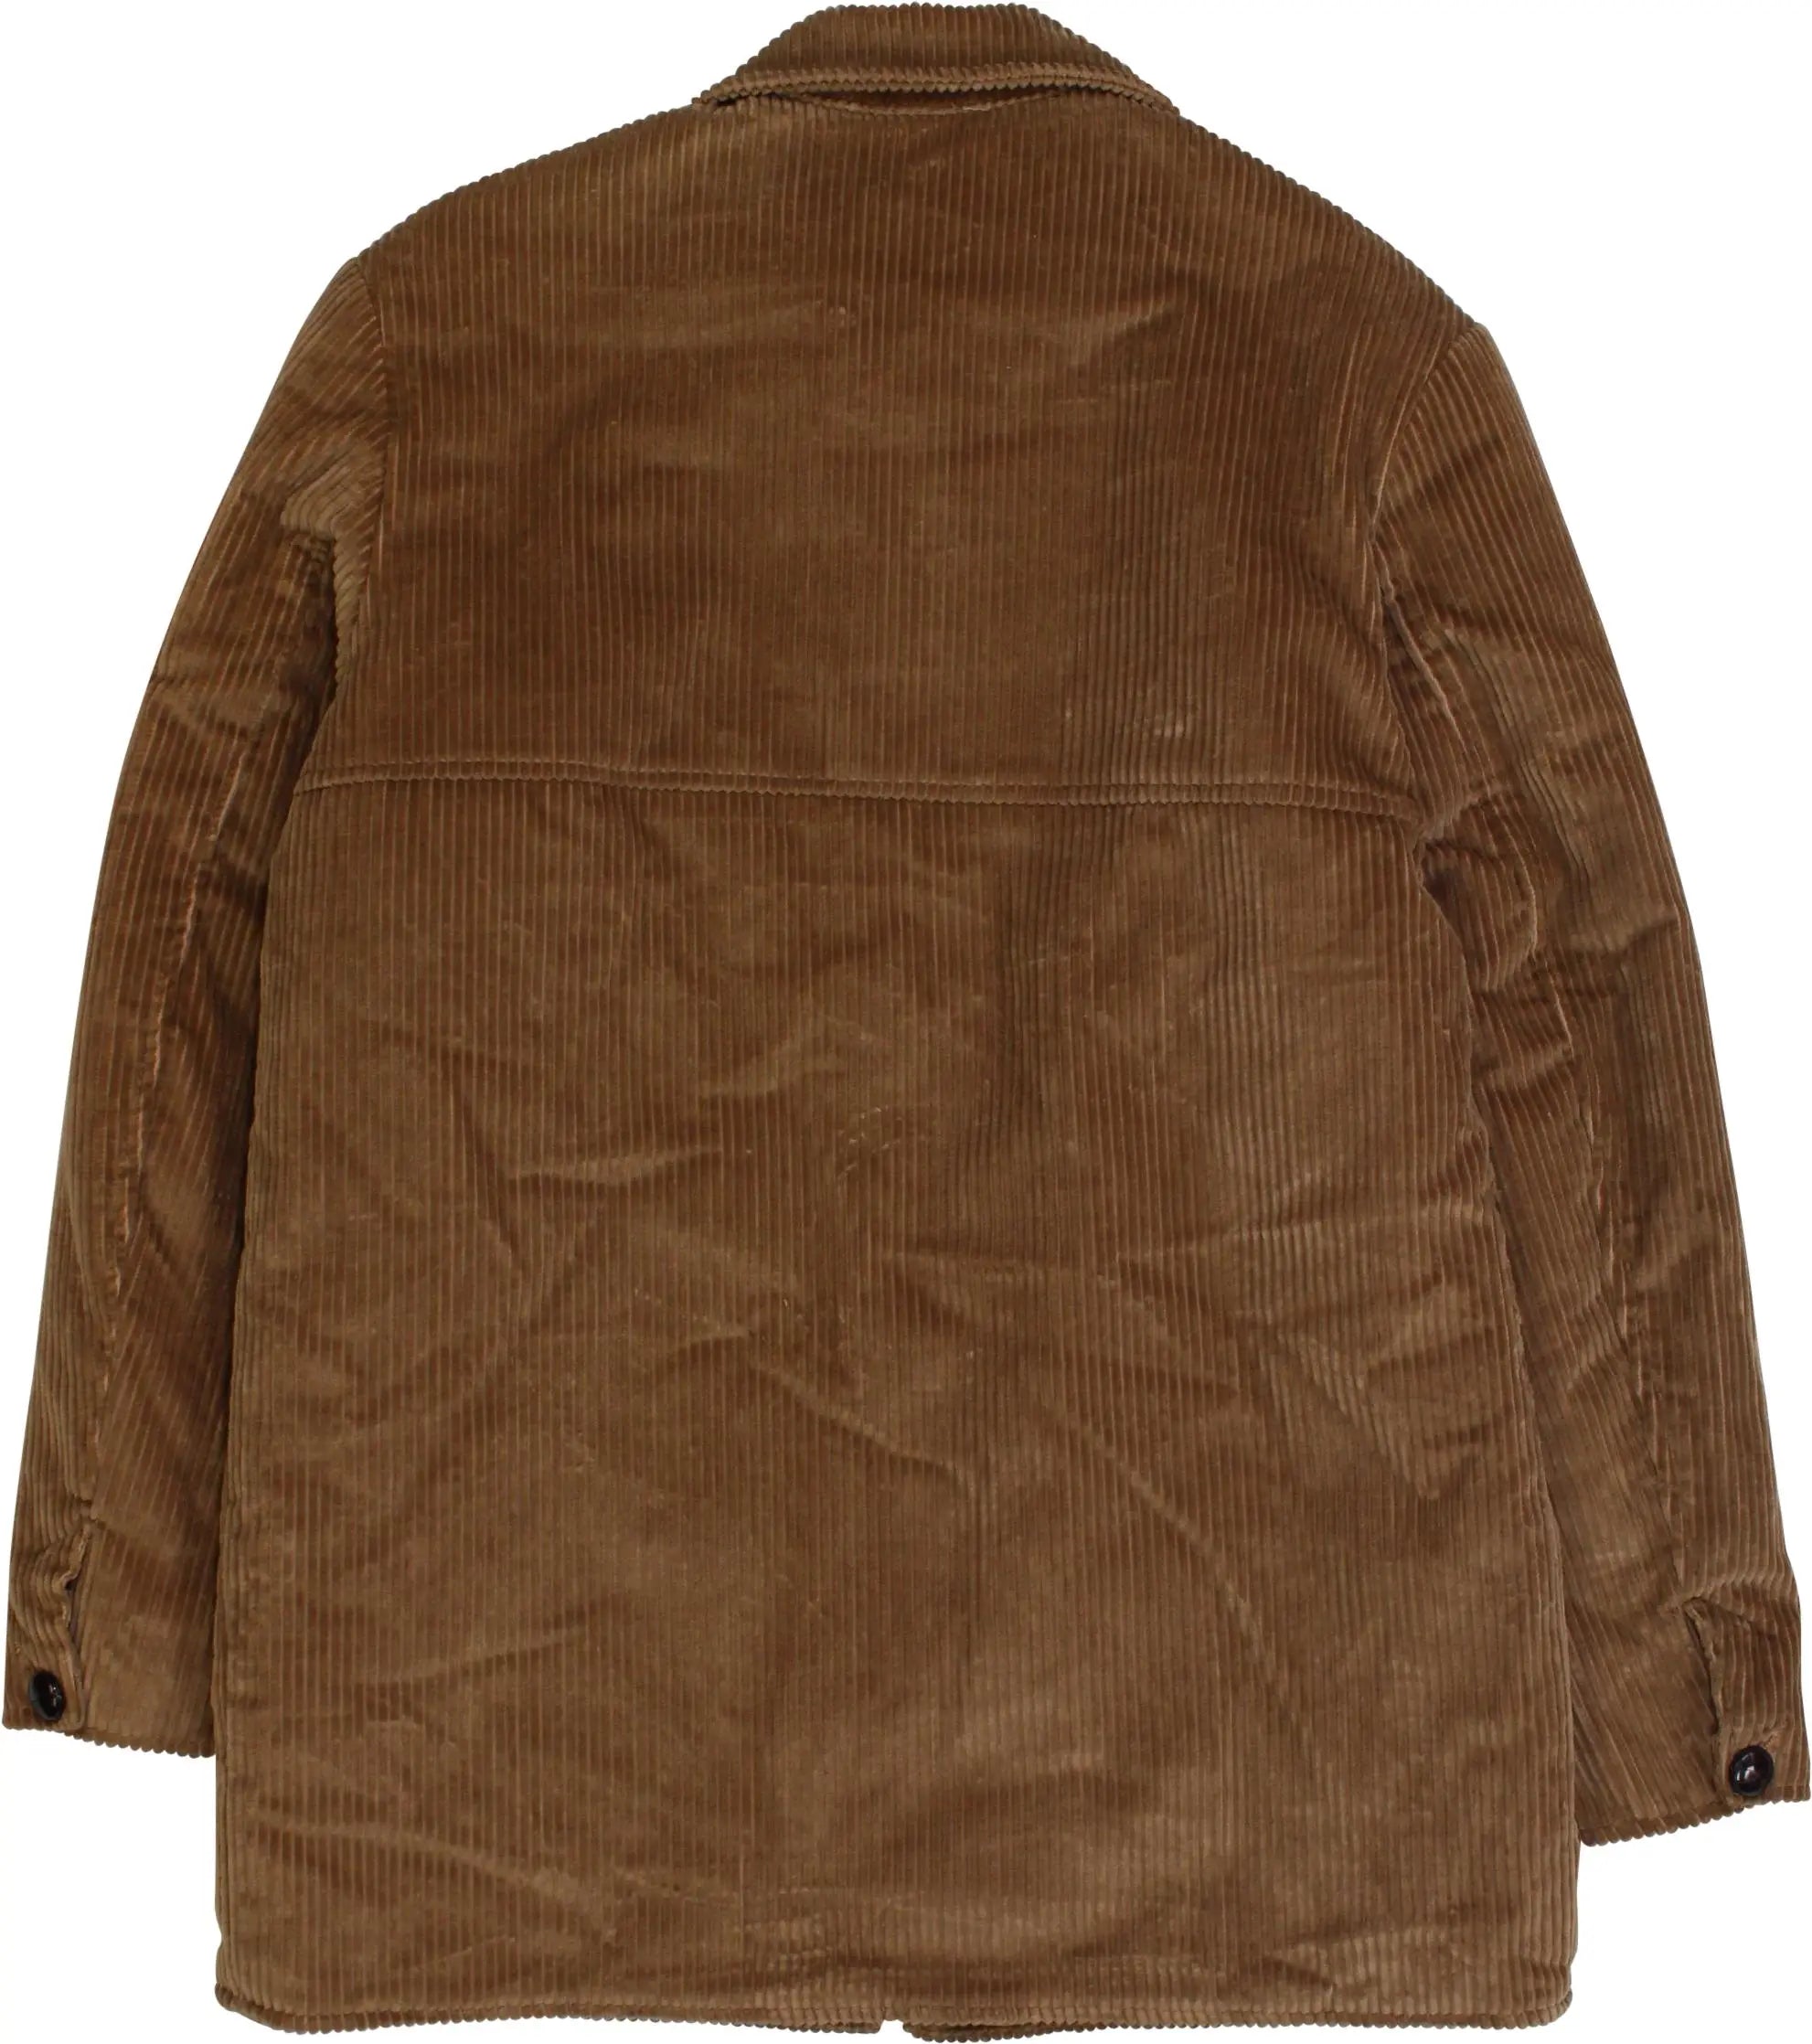 Sportmar - Vintage Corduroy Jacket by Sportmar- ThriftTale.com - Vintage and second handclothing